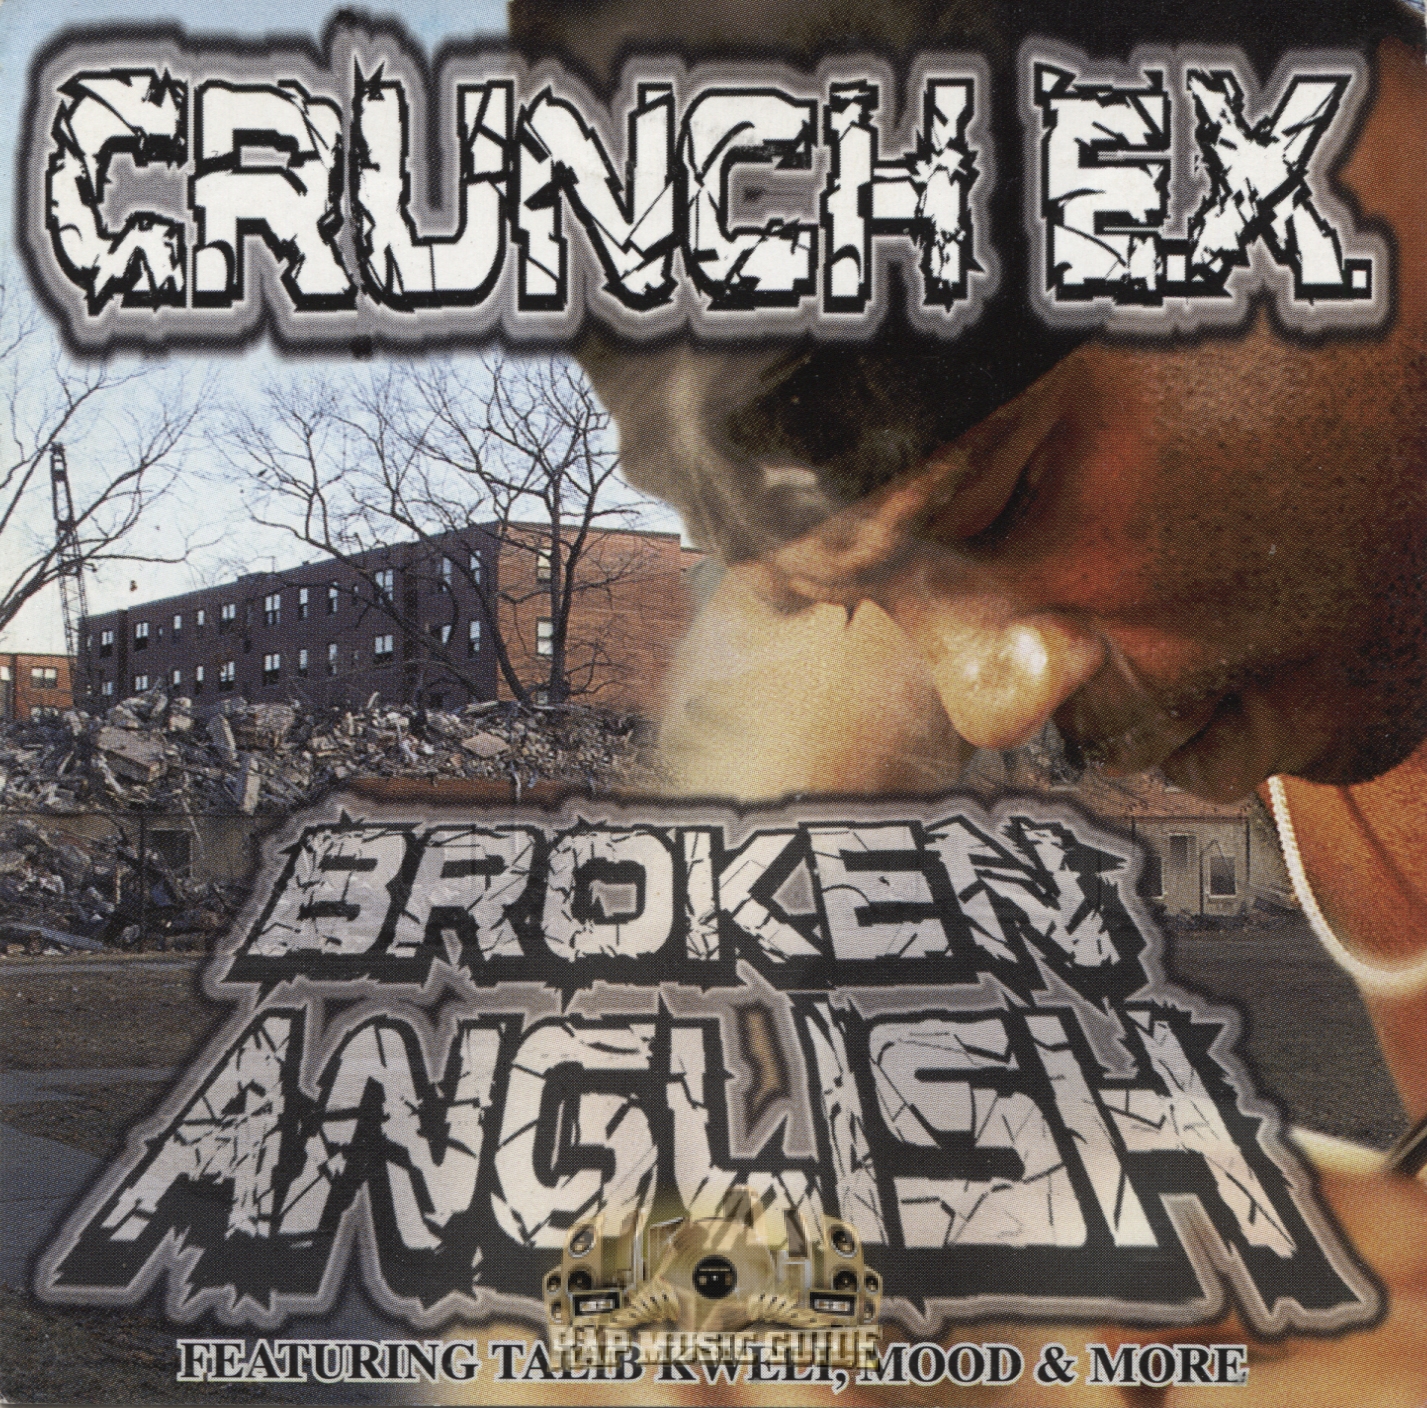 Break bite bang. Crunch Rap. Break bit обложки.